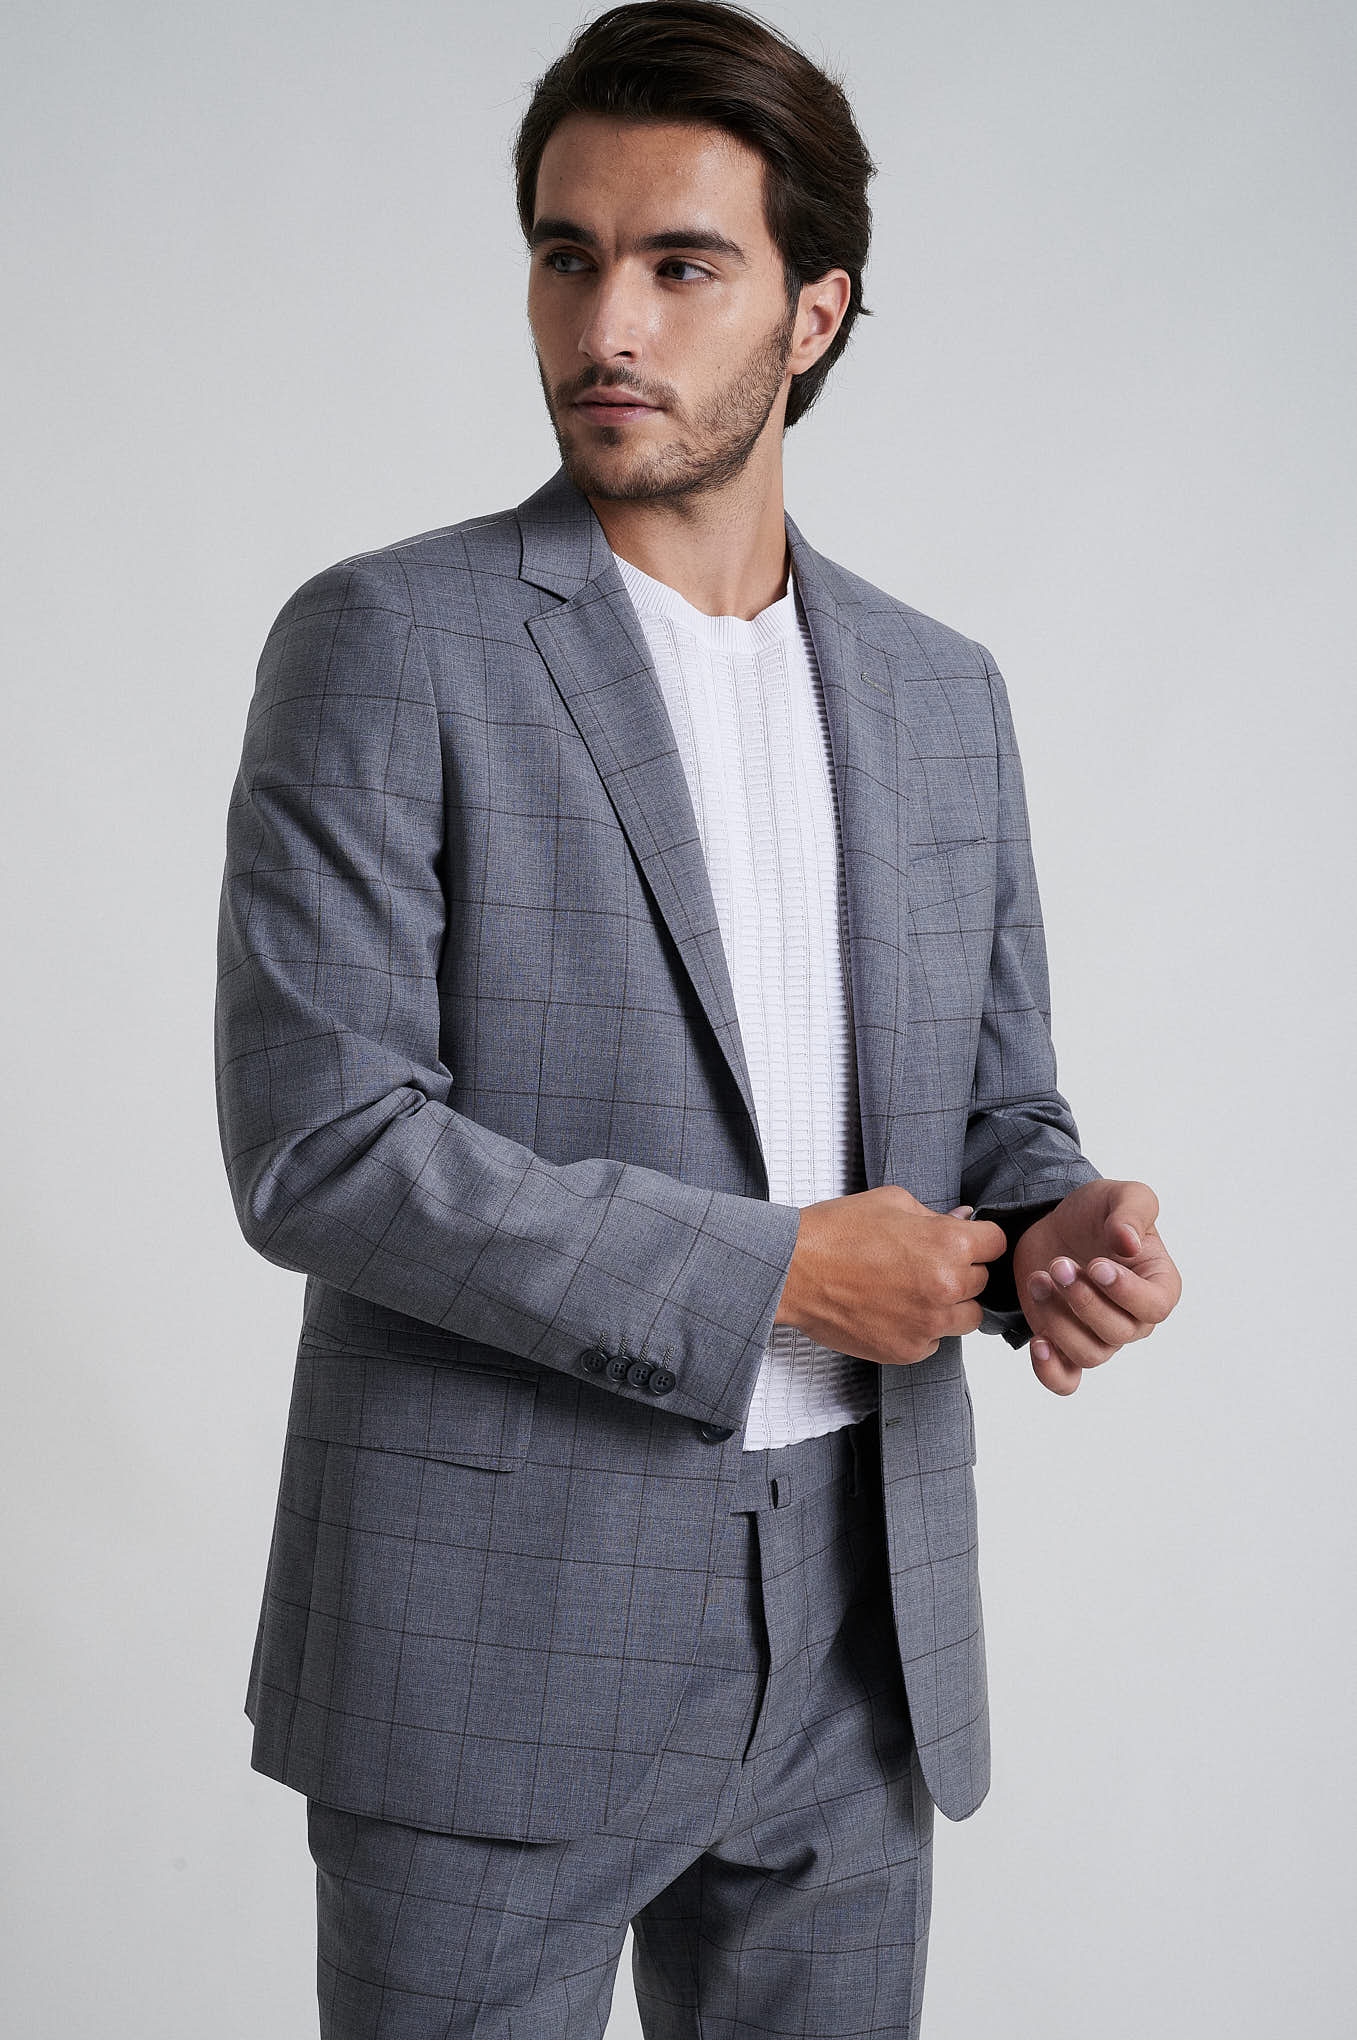 Suit Grey Formal Man